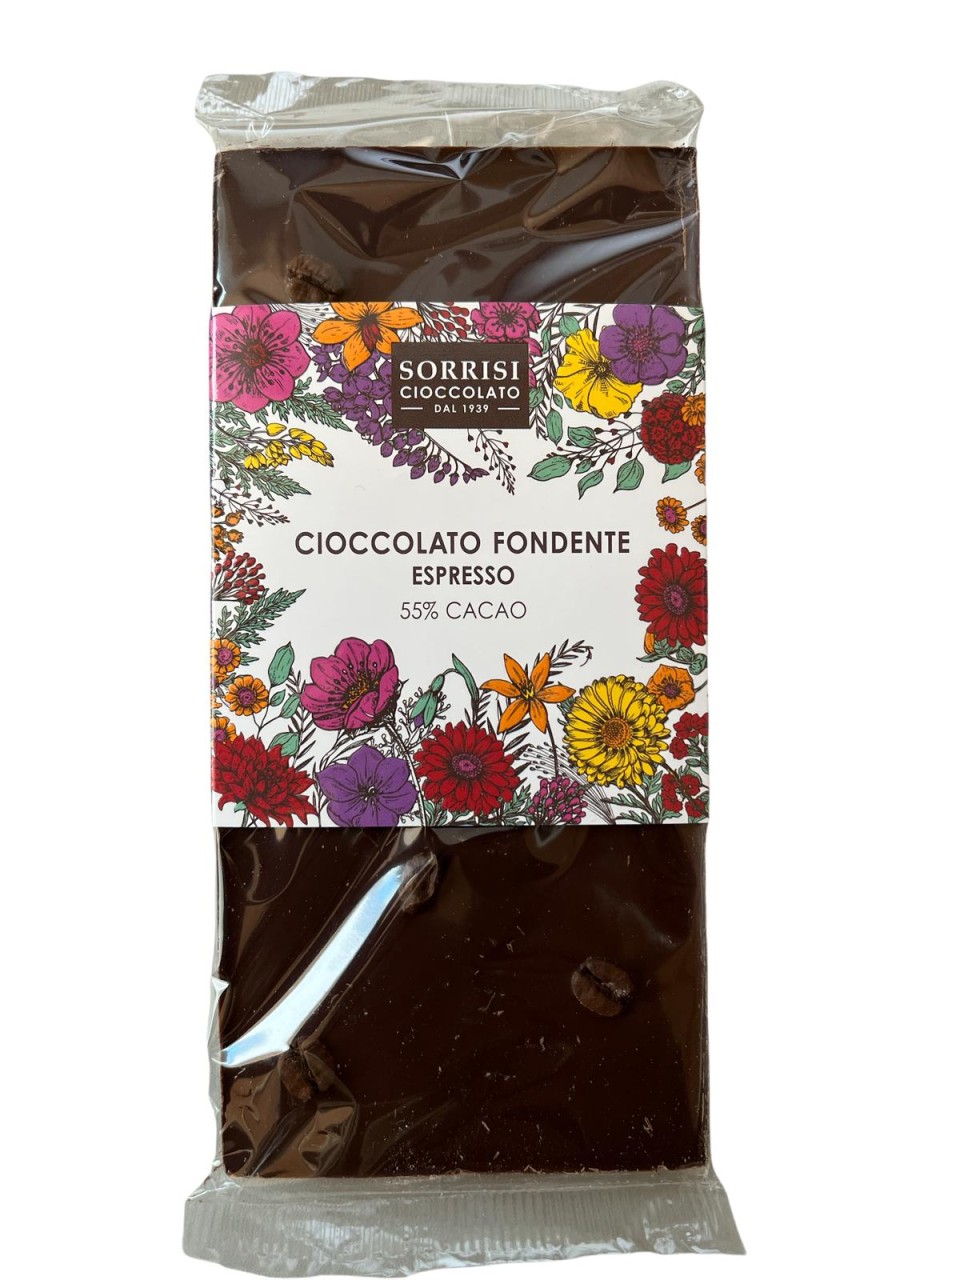 Sorrisi Cioccolato fondente Espresso 55% Cacao 80g